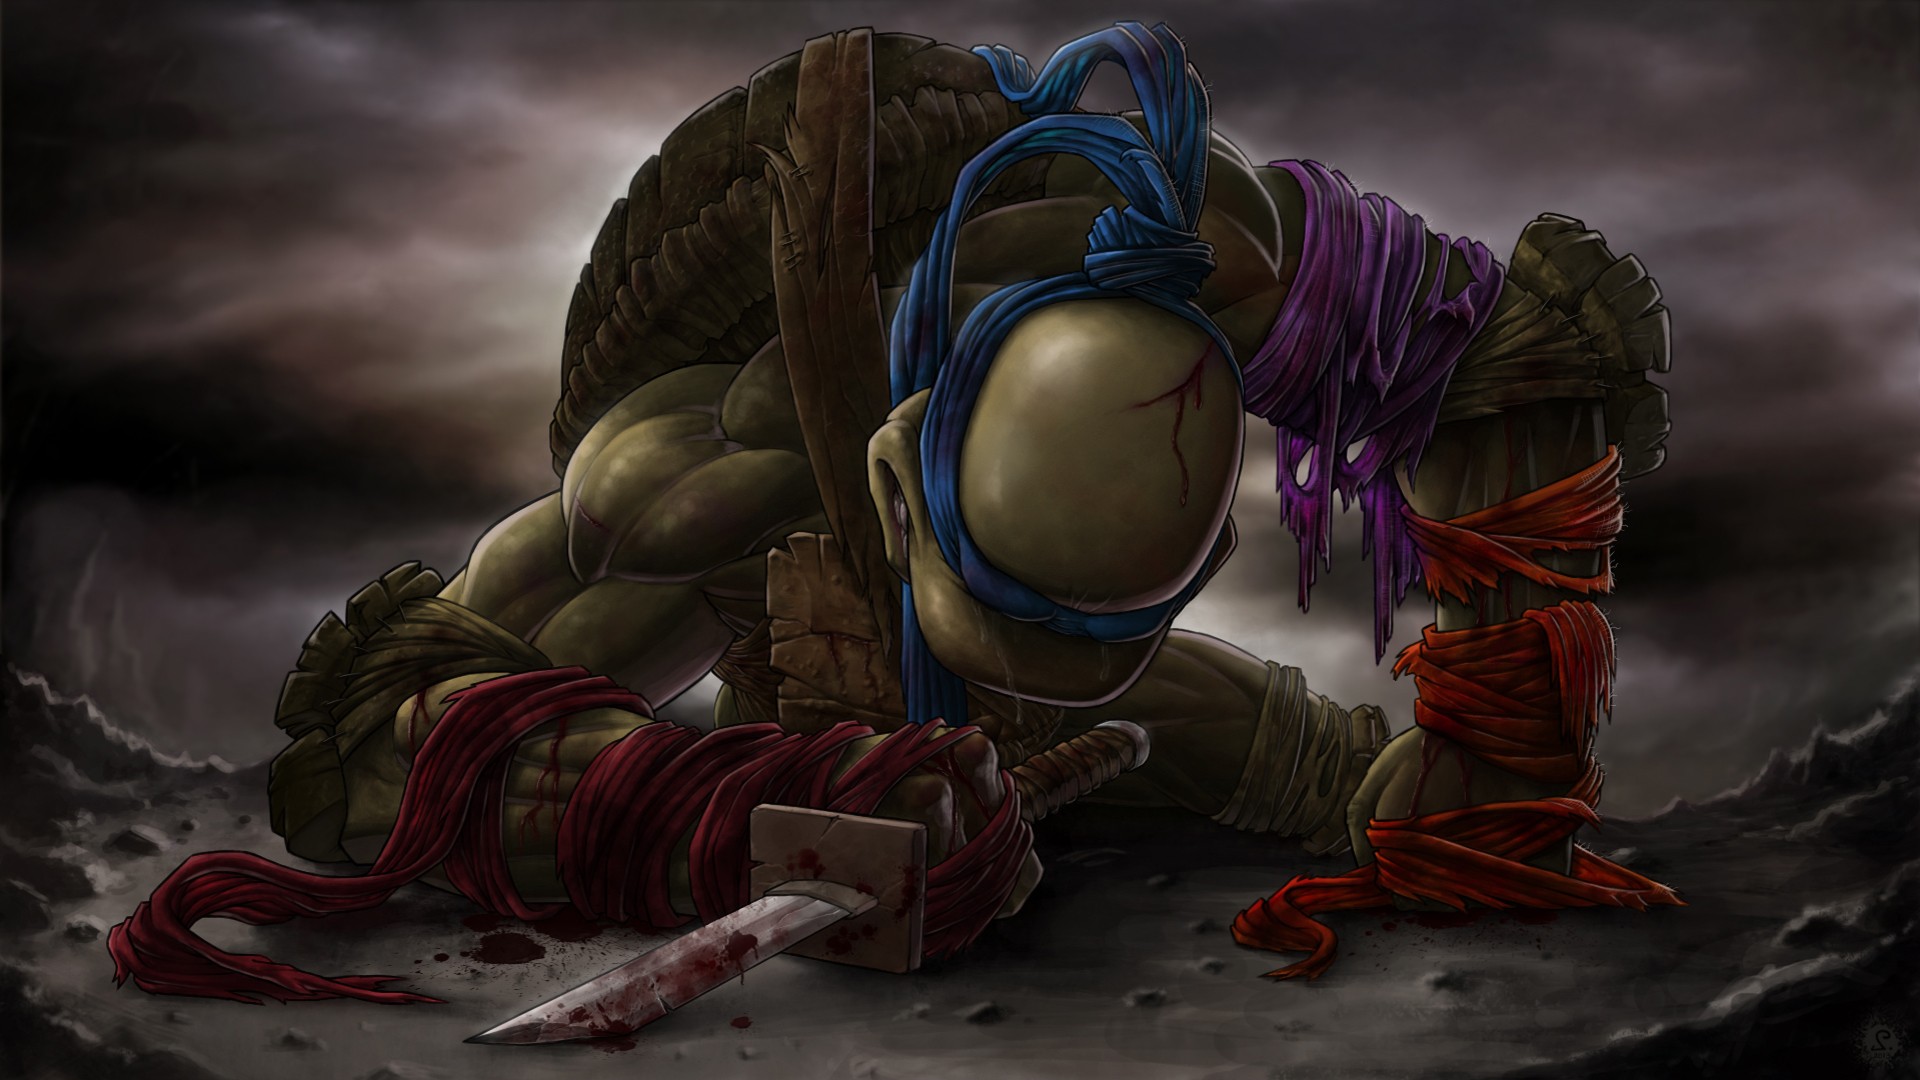 General 1920x1080 Teenage Mutant Ninja Turtles alone blood artwork